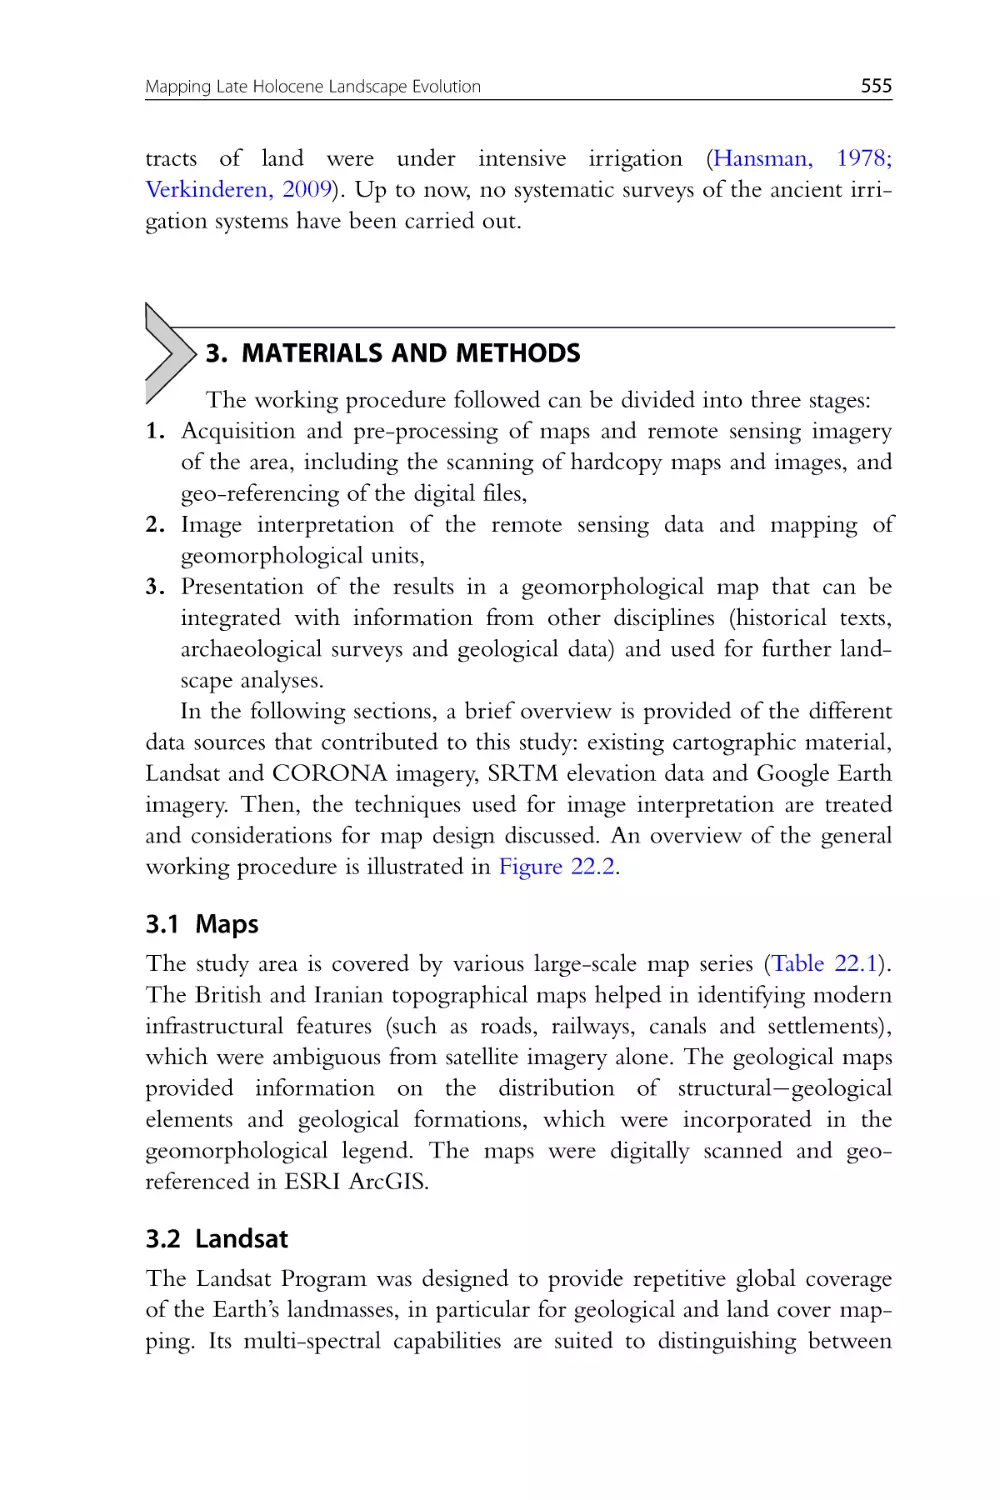 3. Materials and Methods
3.1 Maps
3.2 Landsat